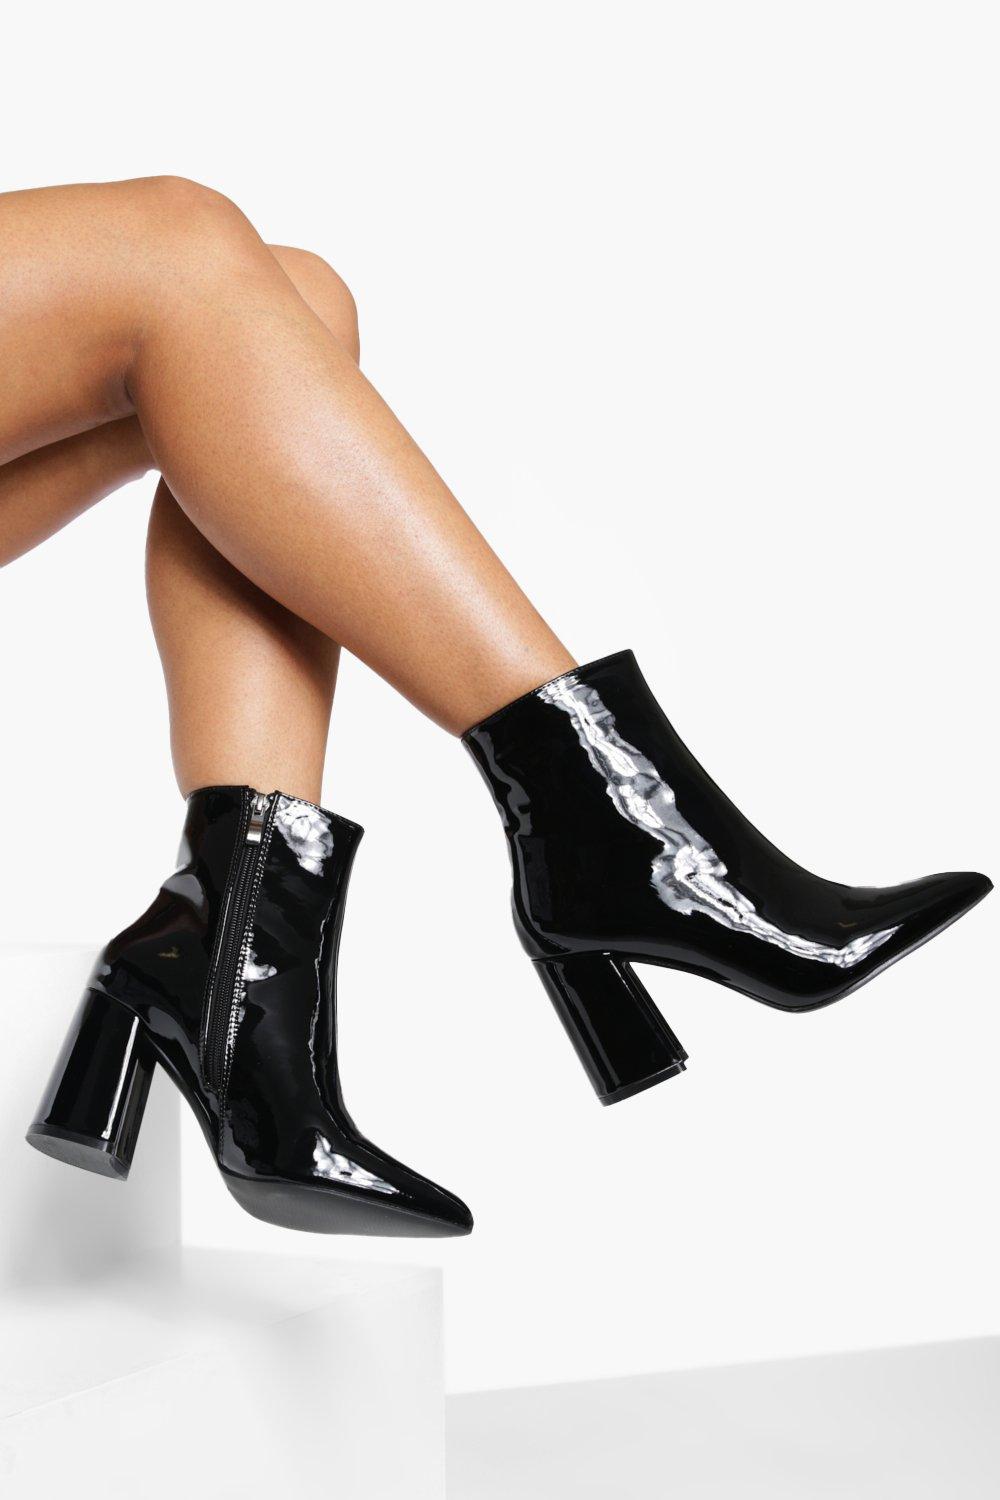 Shoe Boots | Women's Peep Toe & Heeled Booties | boohoo